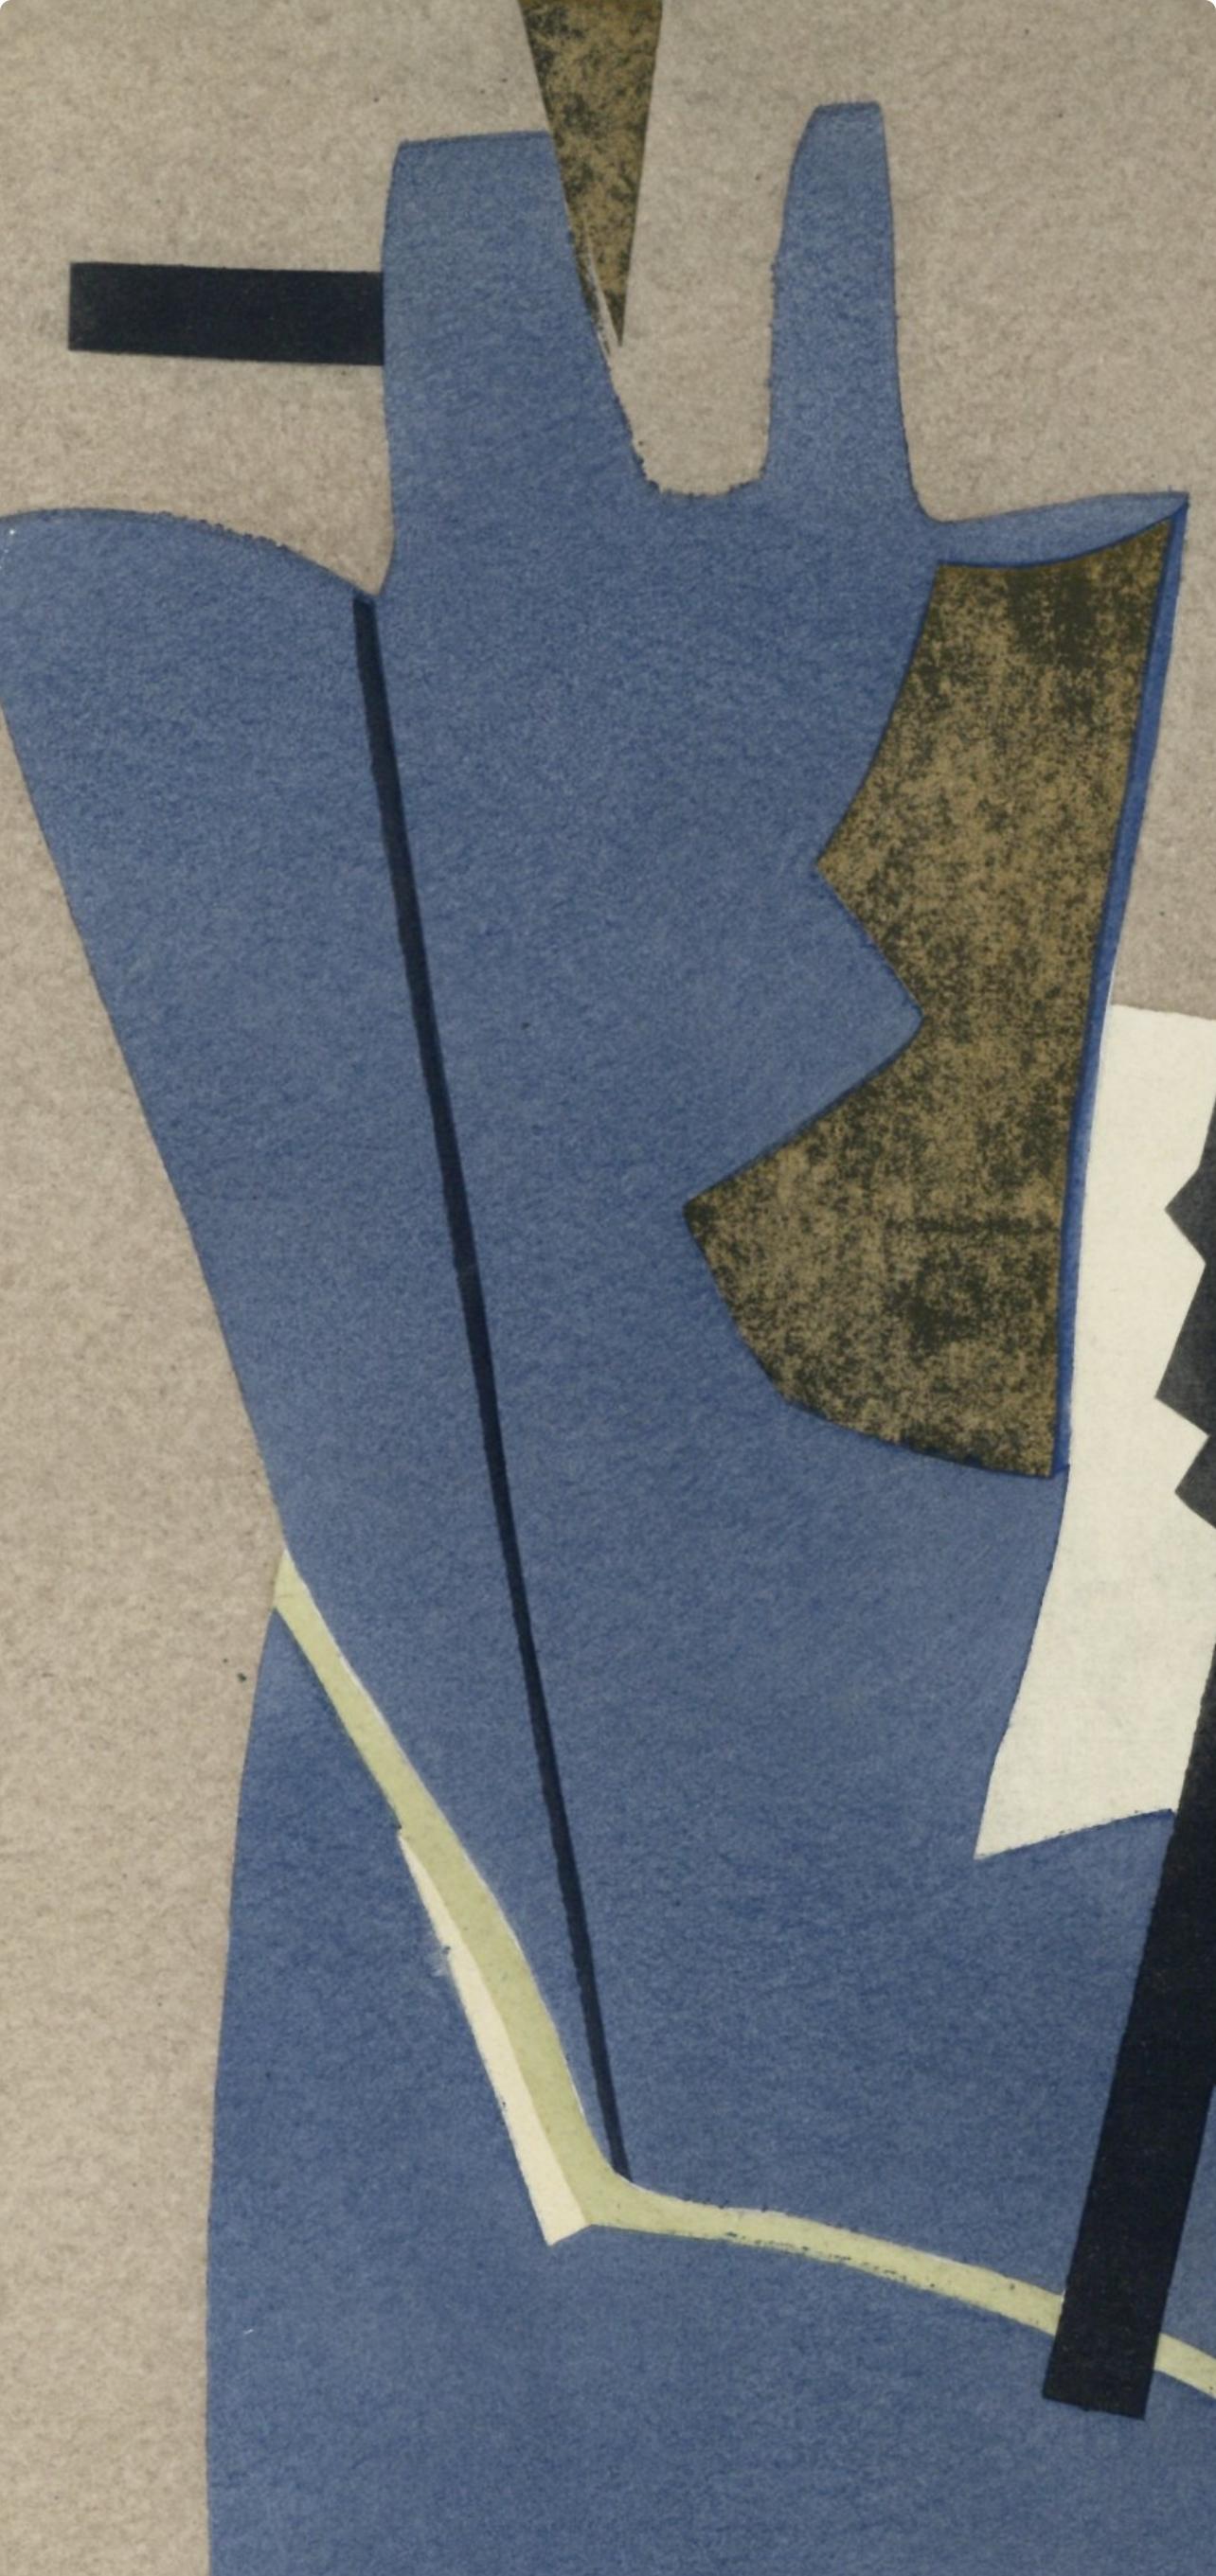 Magnelli, Papier collé, XXe Siècle (after) - Print by Alberto Magnelli